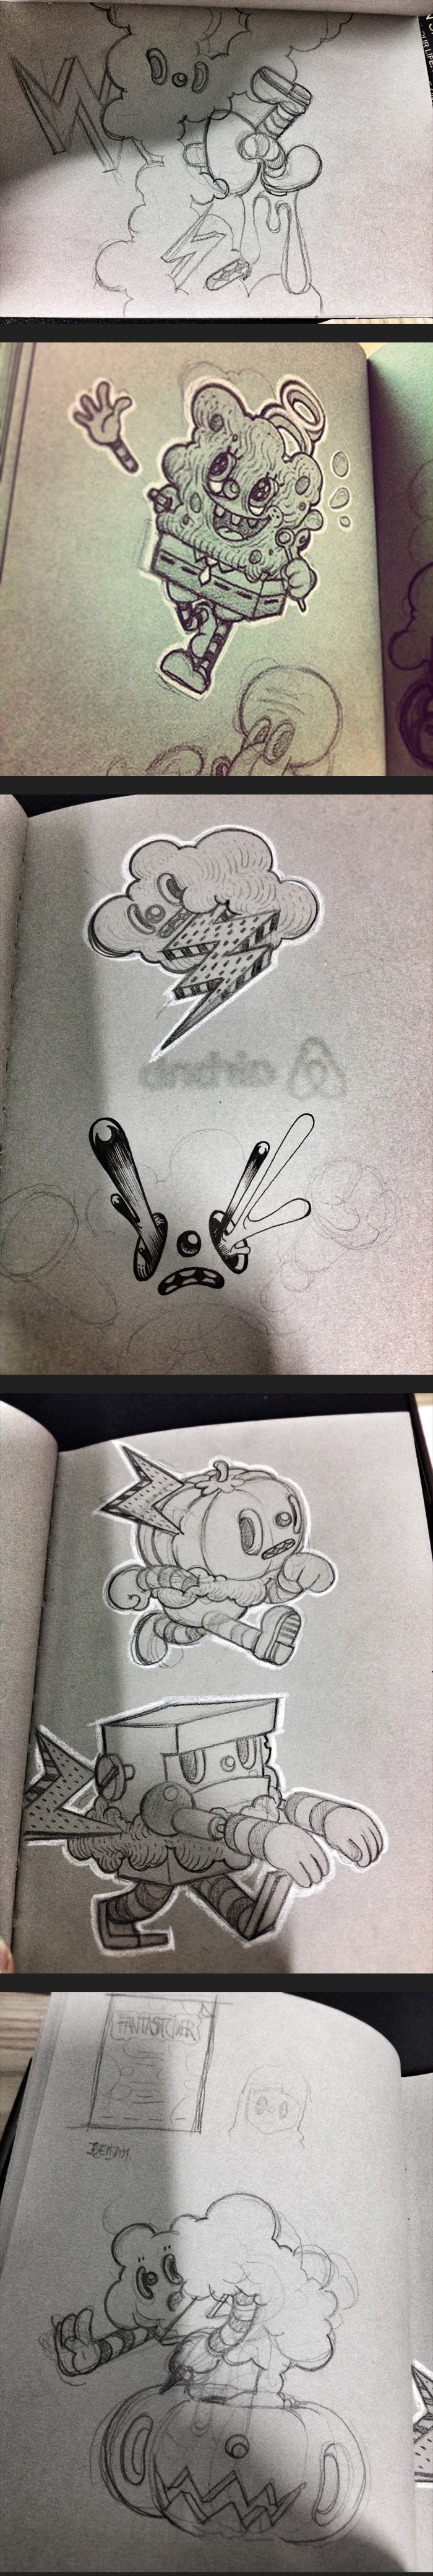 08AM art artist Character parakid sketch sketchbook illust